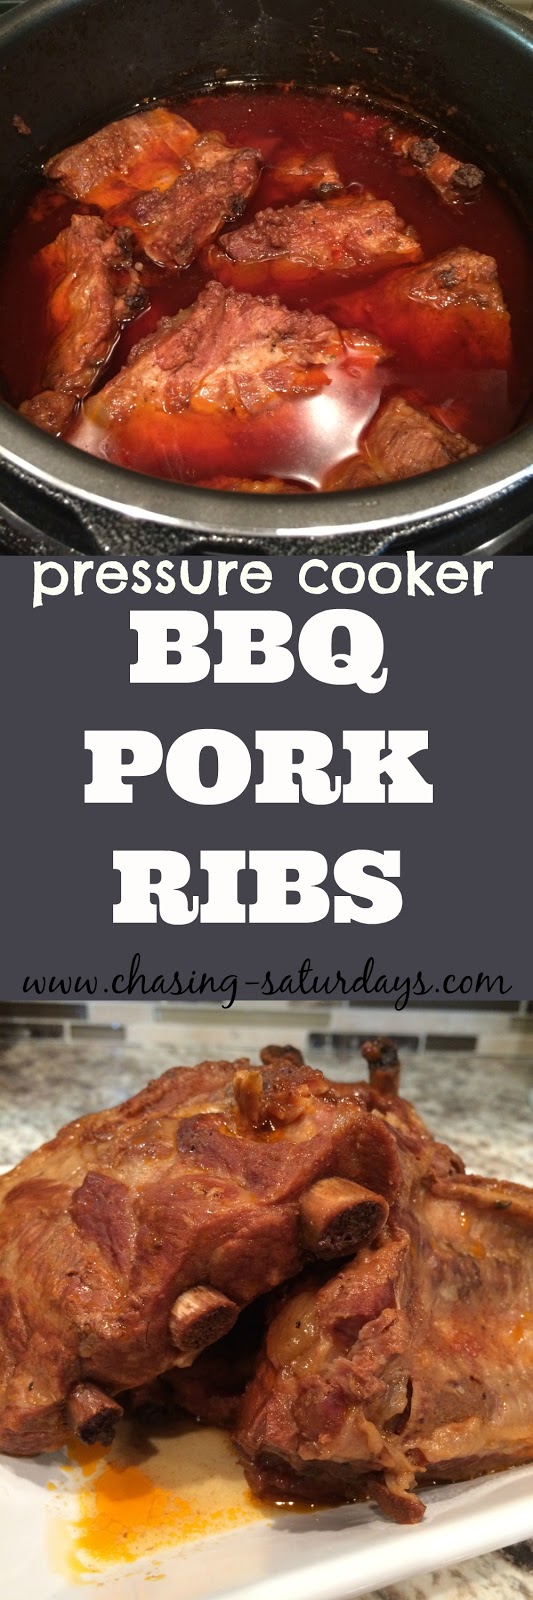 Pressure Cooker BBQ Pork Ribs Chasing Saturdays